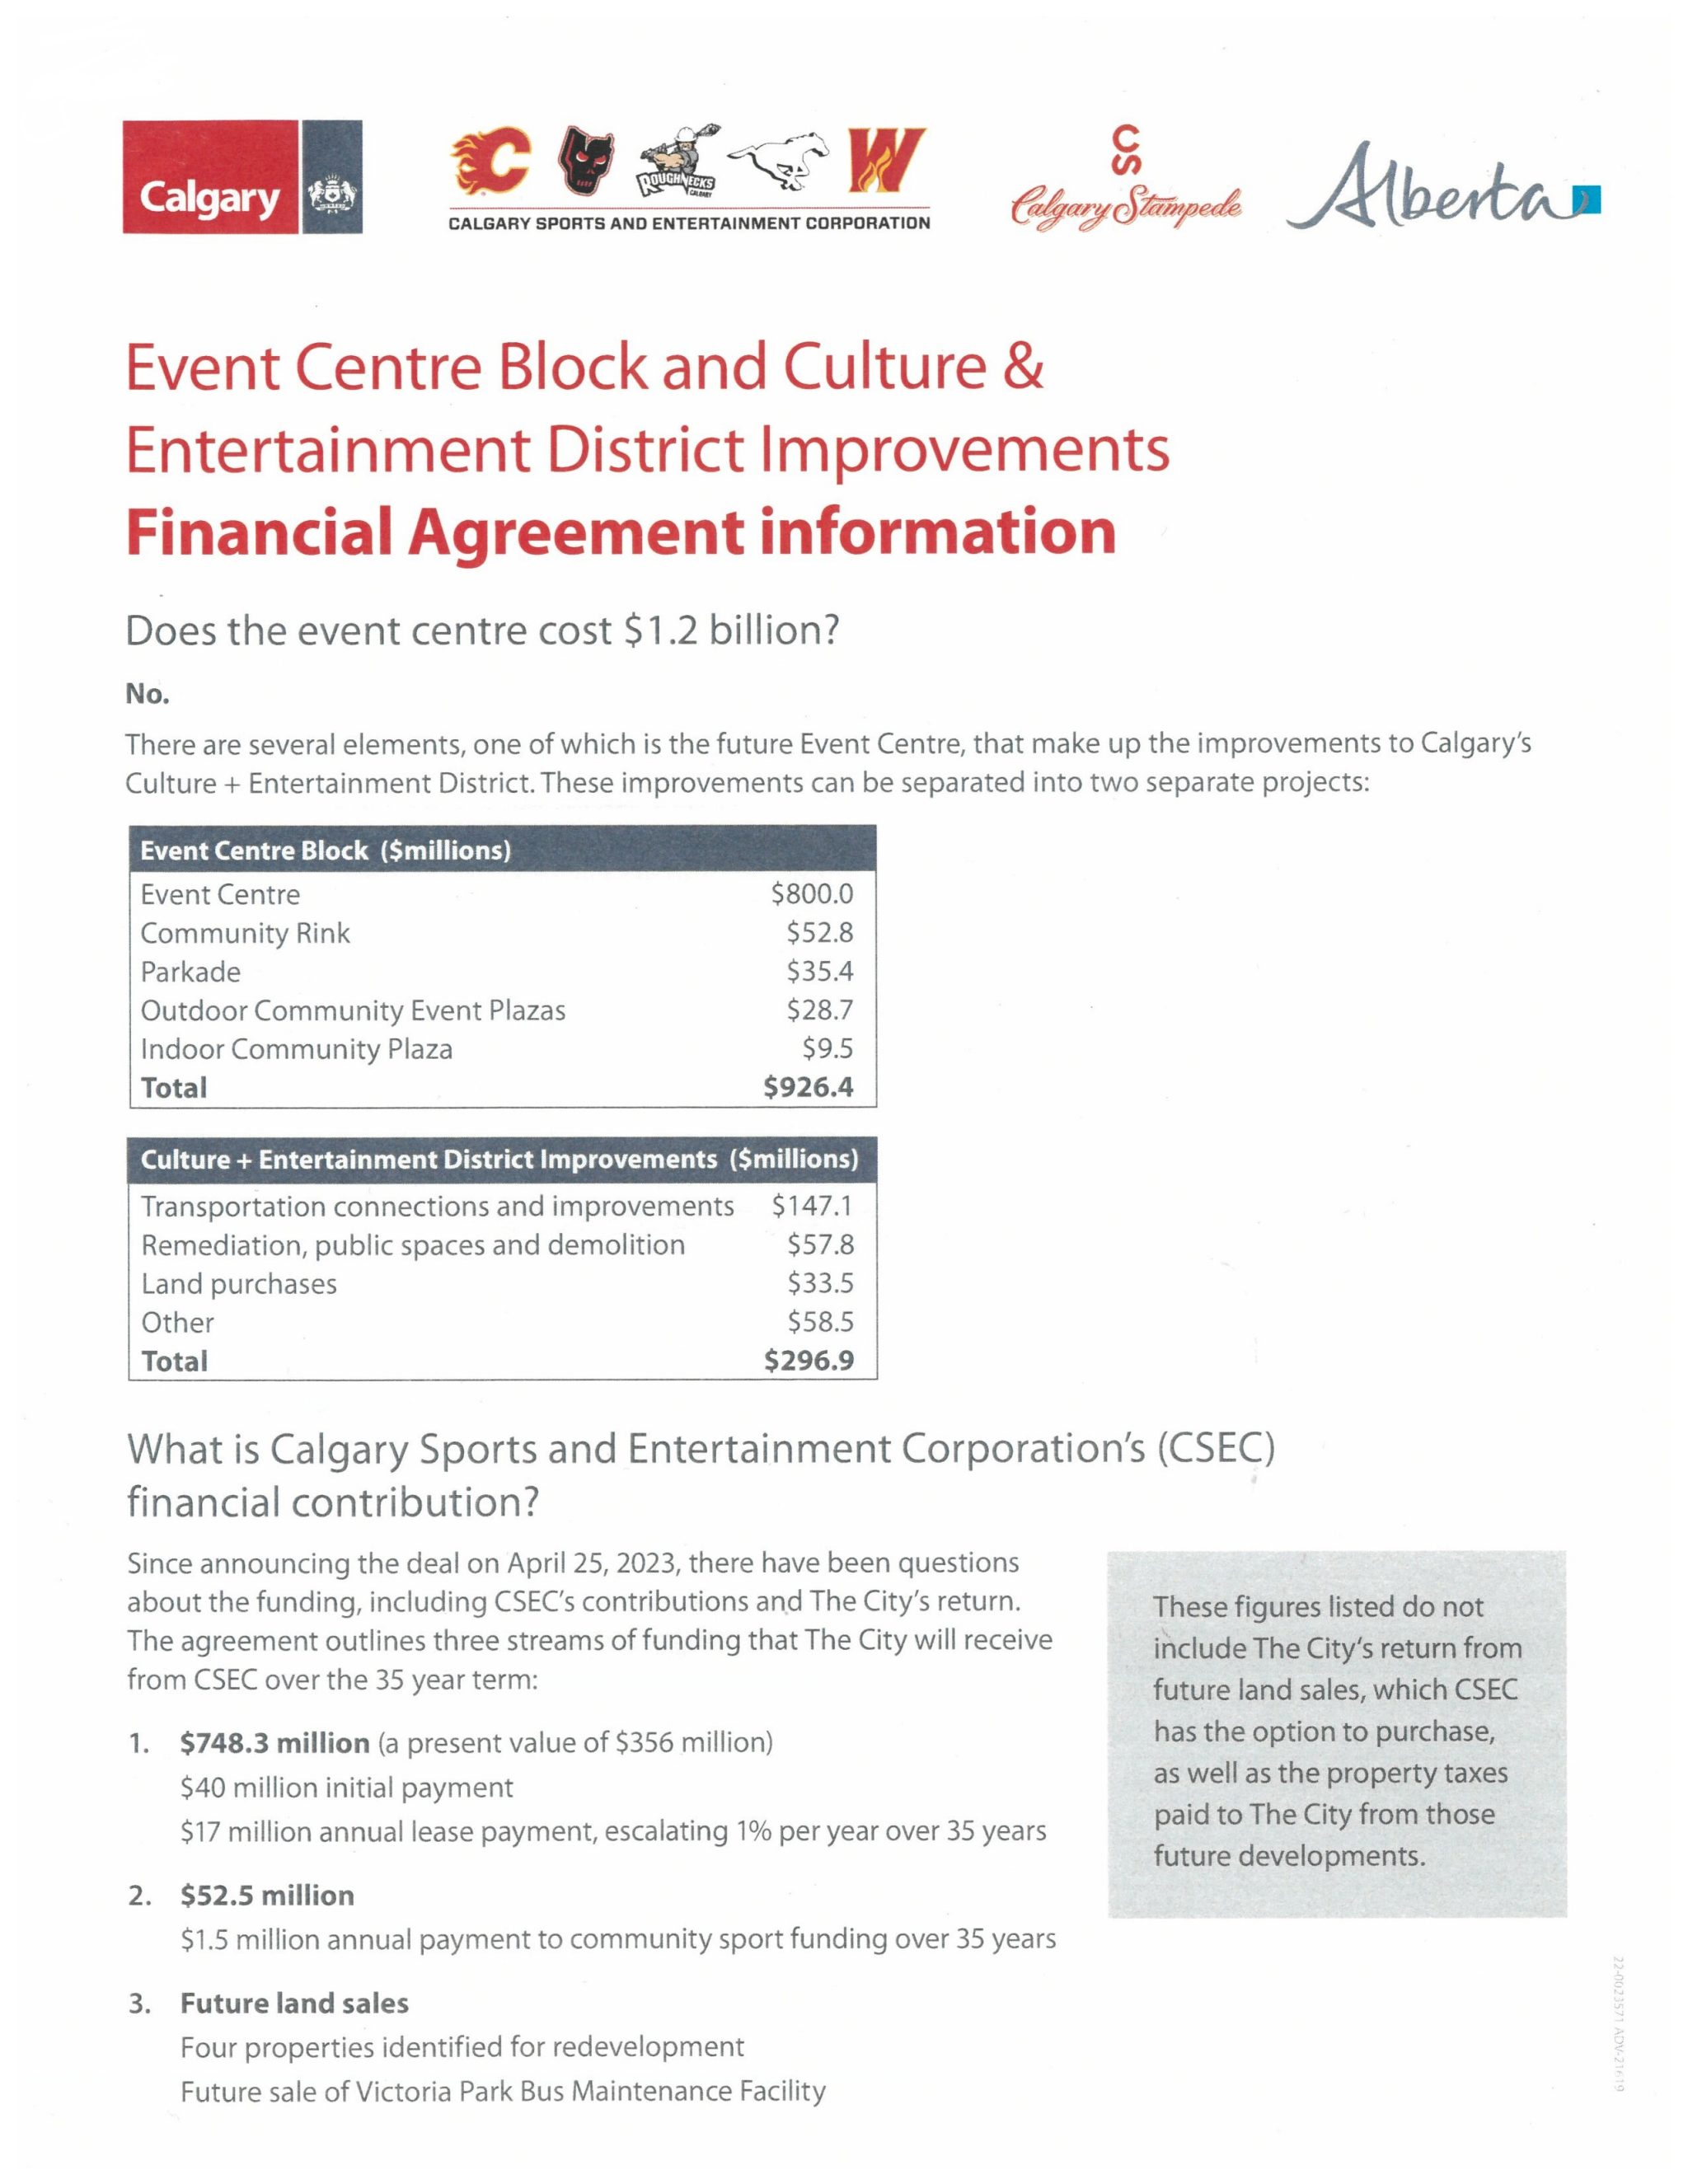 Event Centre Block Financial Agreement Information